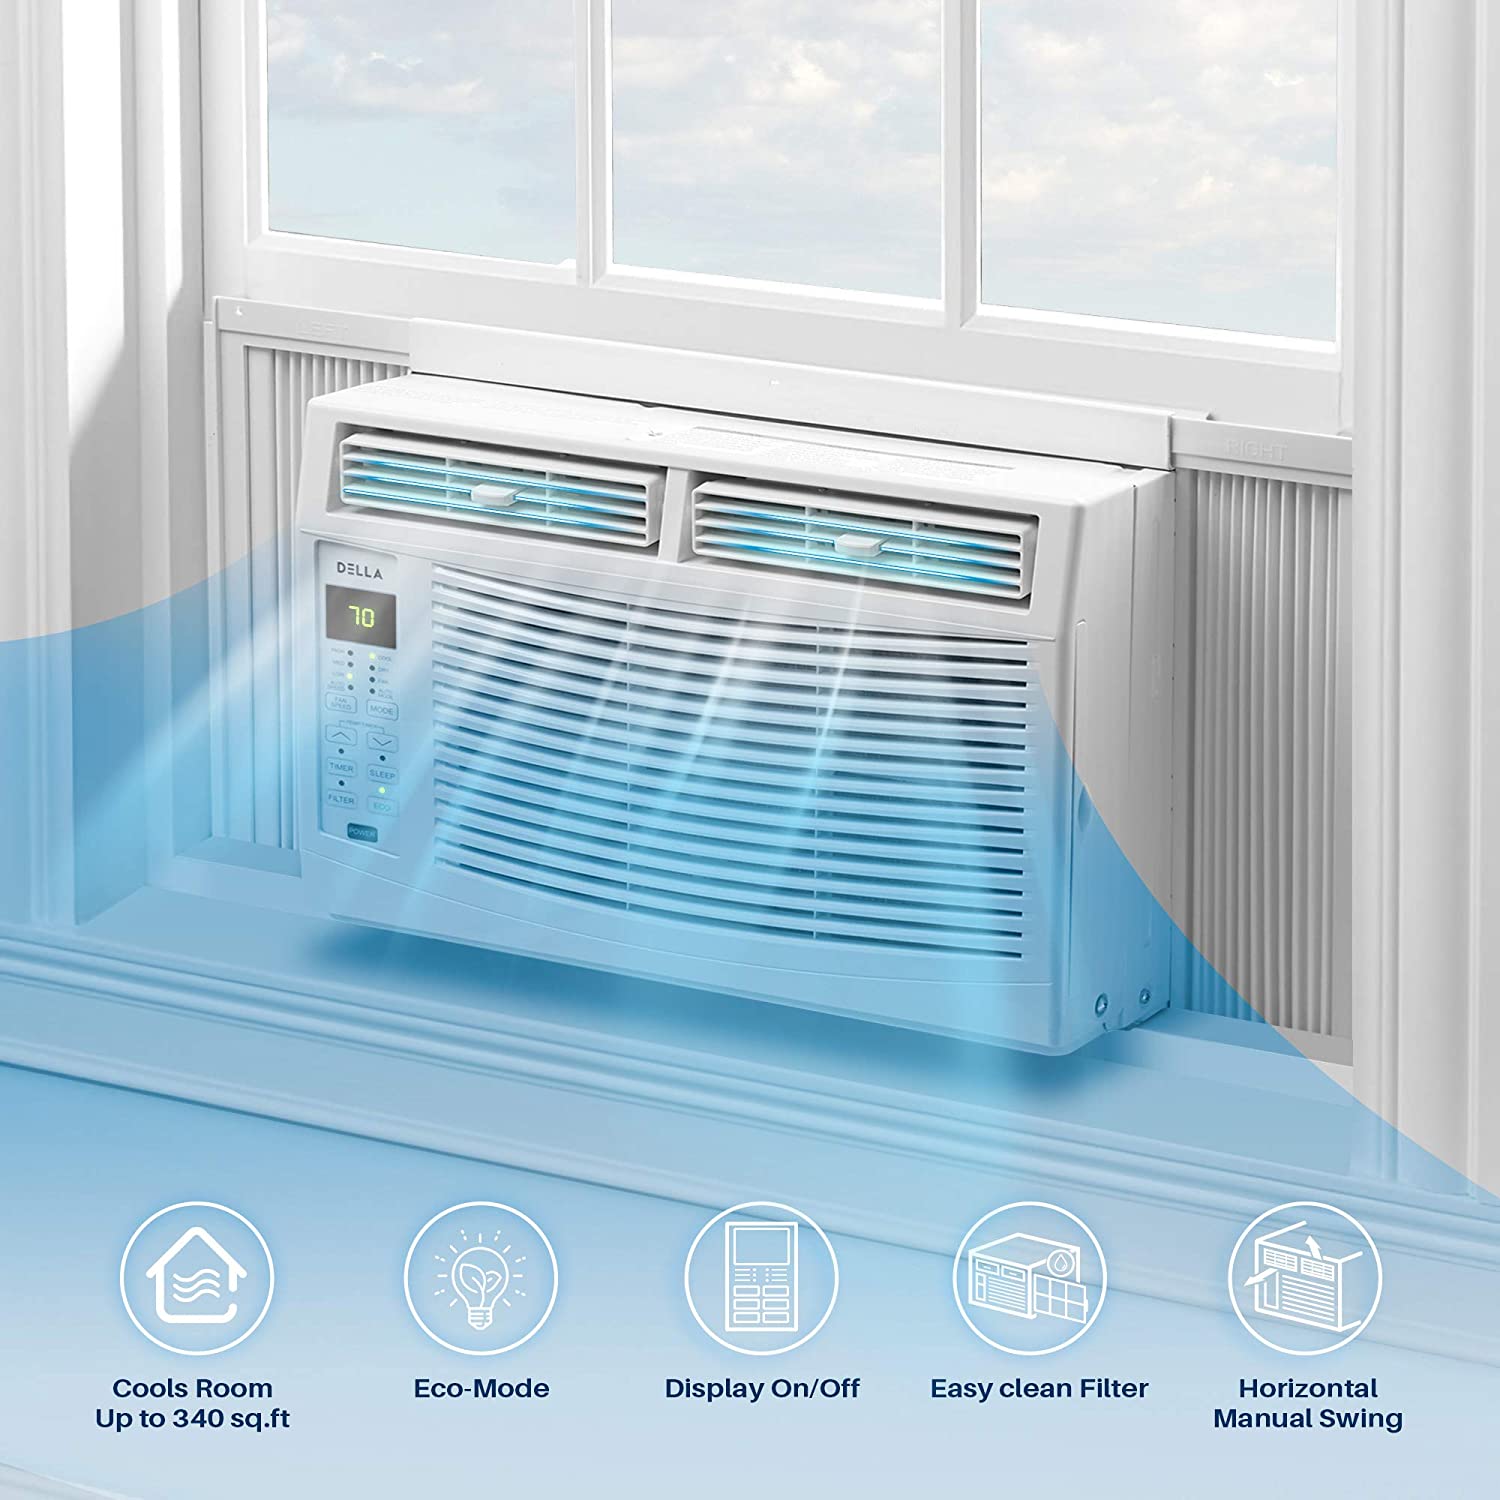 Della 6000 BTU Window Air Conditioner